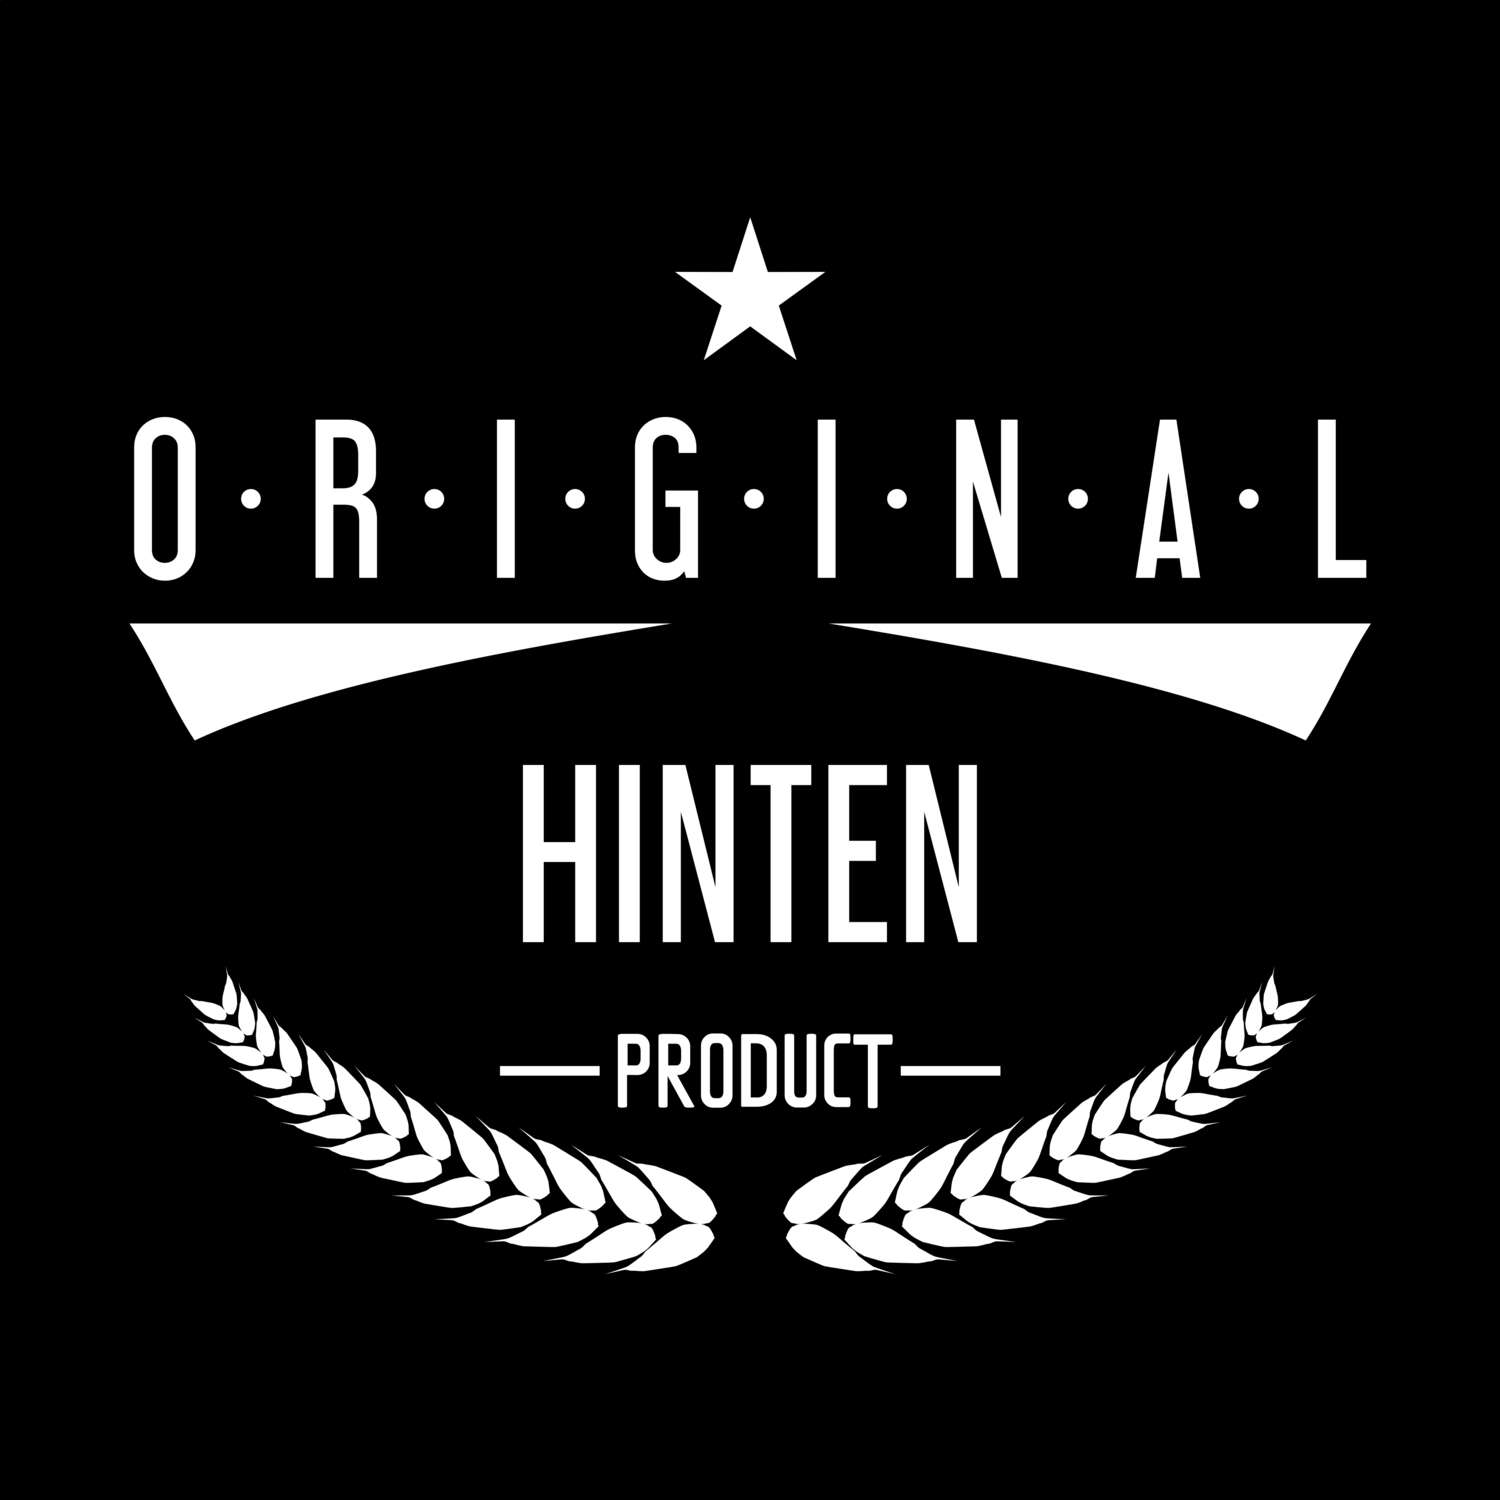 Hinten T-Shirt »Original Product«